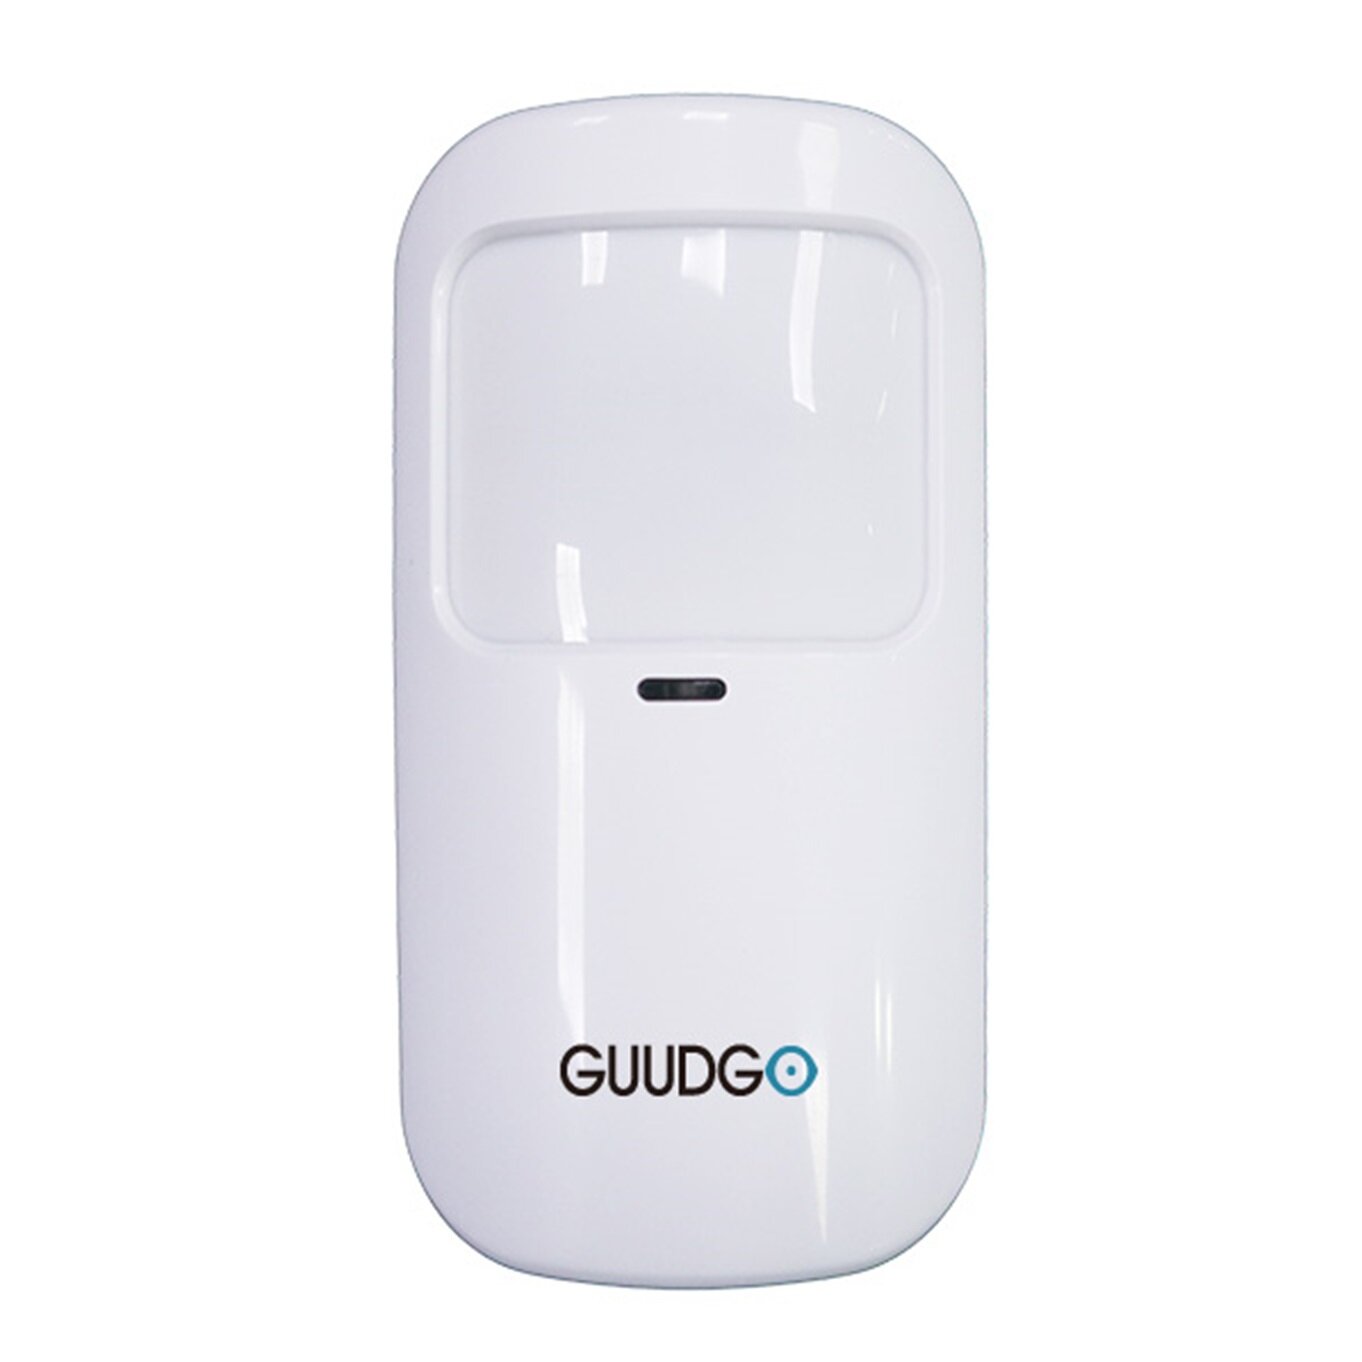 GUUDGO Wireless Pet-immunity PIR Motion المستشعر Motion Detecting Human Body Infrared المستشعر433MHz لنظام إنذار